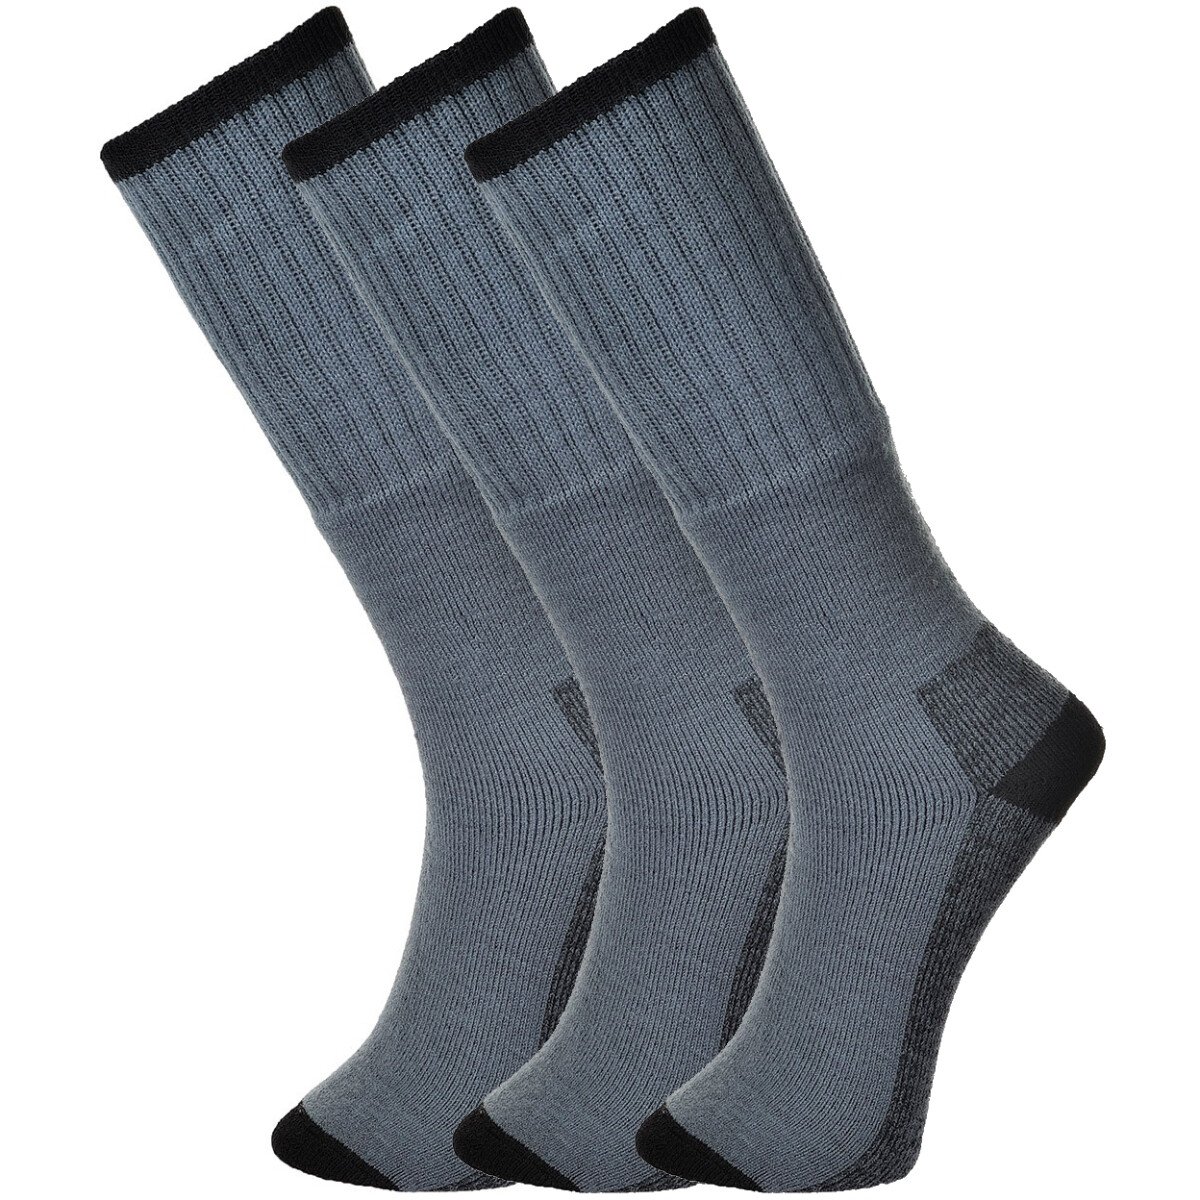 Portwest SK33-Grey Size 10 - Size 13 (EU44 - EU48) Workwear Socks Triple Pack